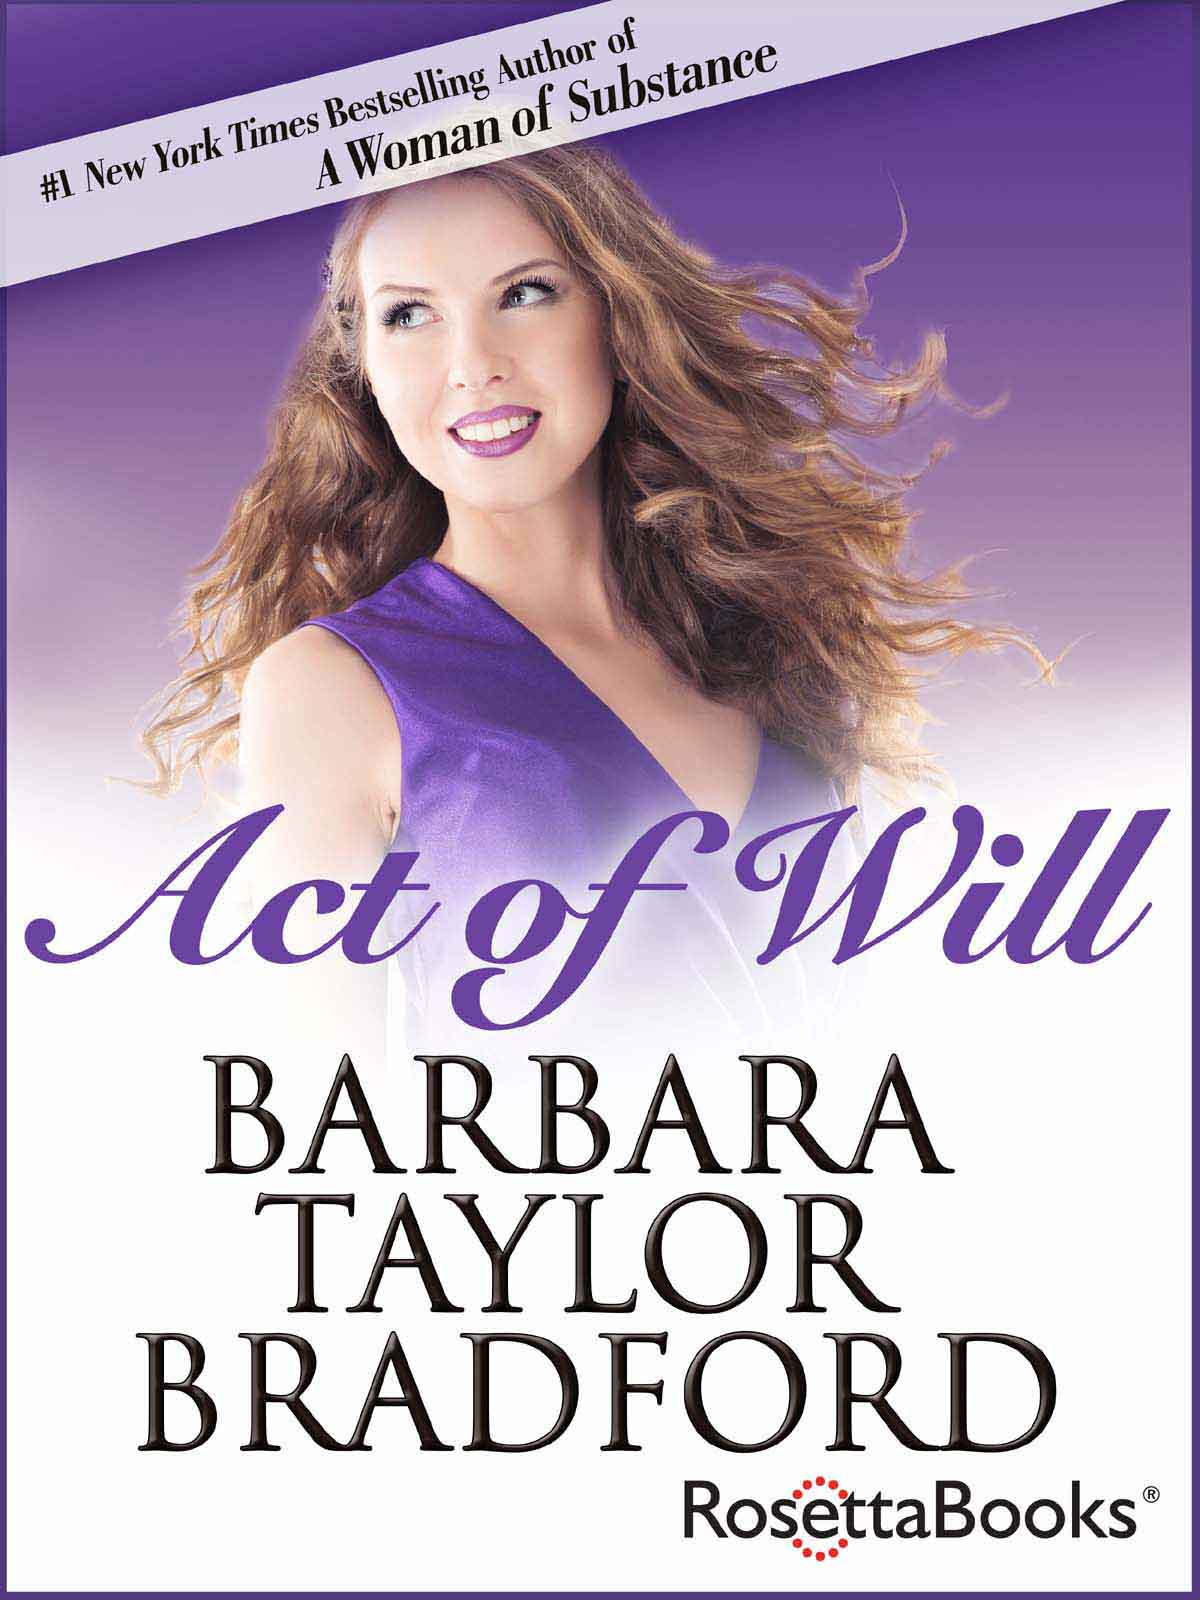 Act of Will (2014) by Barbara Taylor Bradford